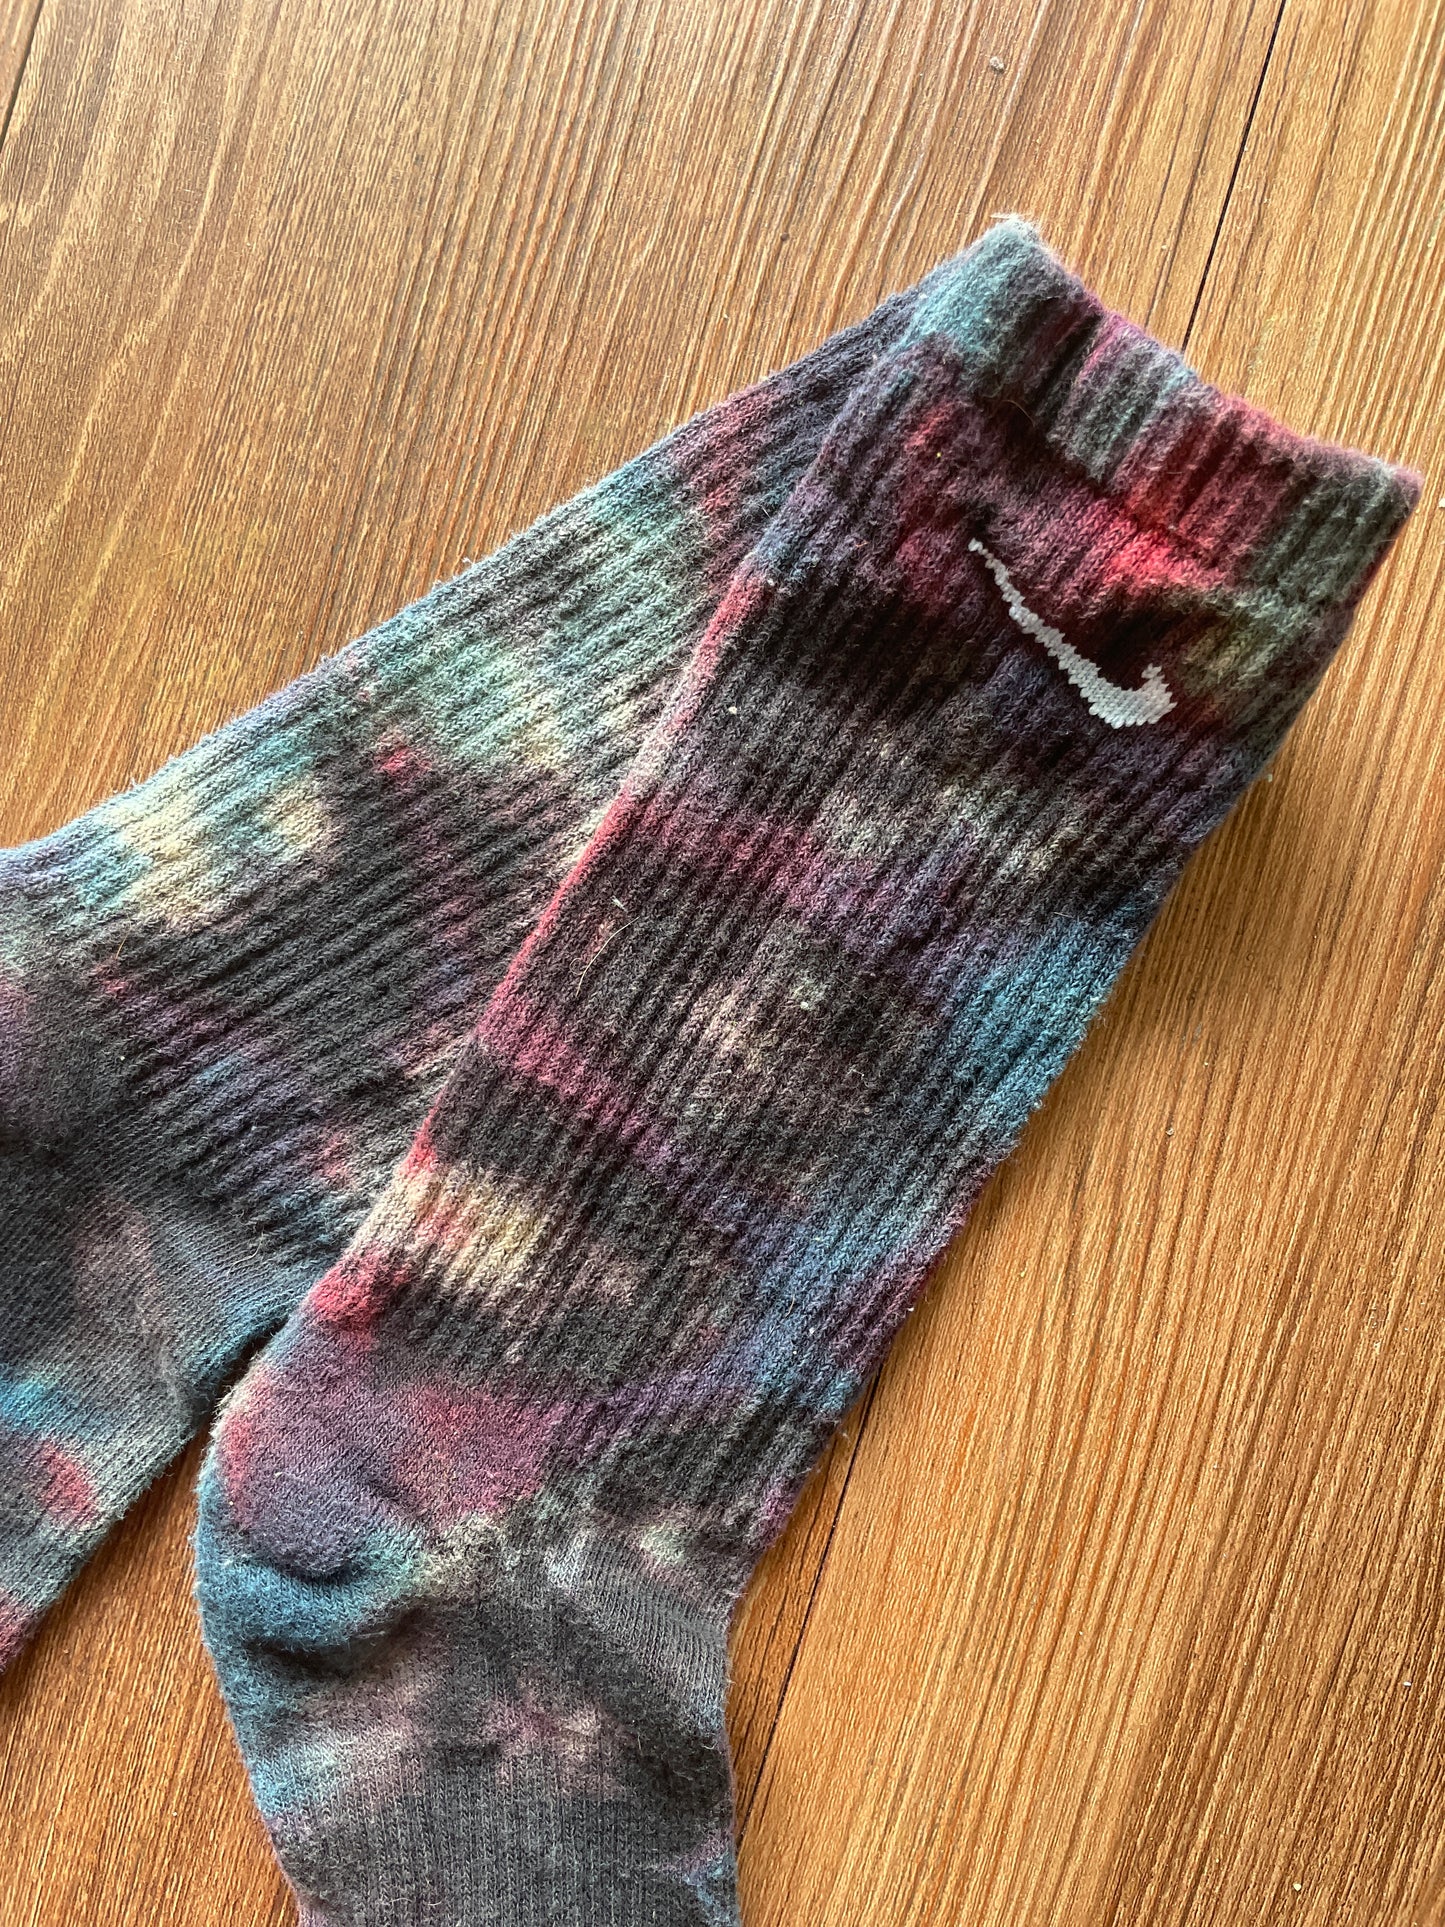 Red, Blue, and Black Reverse Tie Dye Nike Dri-FIT Training Socks - Size Medium (Men's 6-8/Women's 7-10)